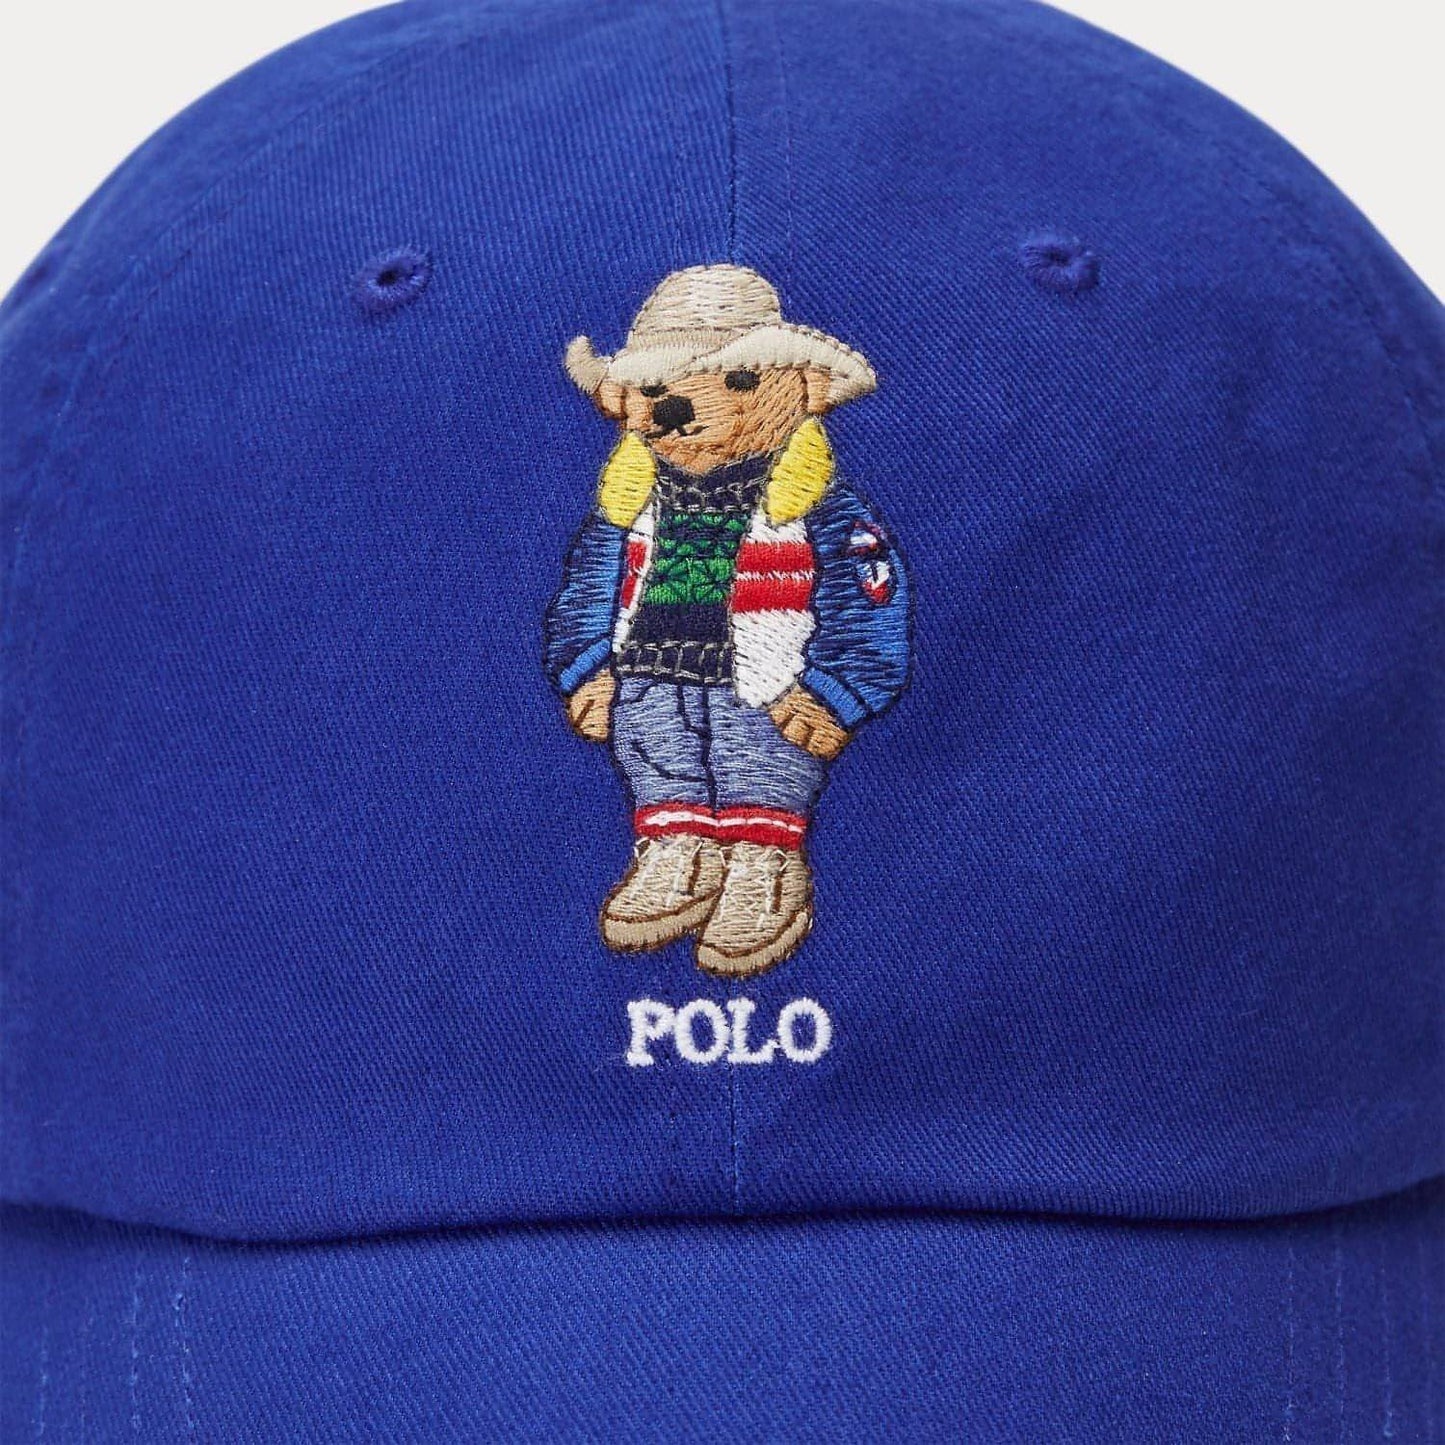 POLO RALPH LAUREN vyriška mėlyna kepurė